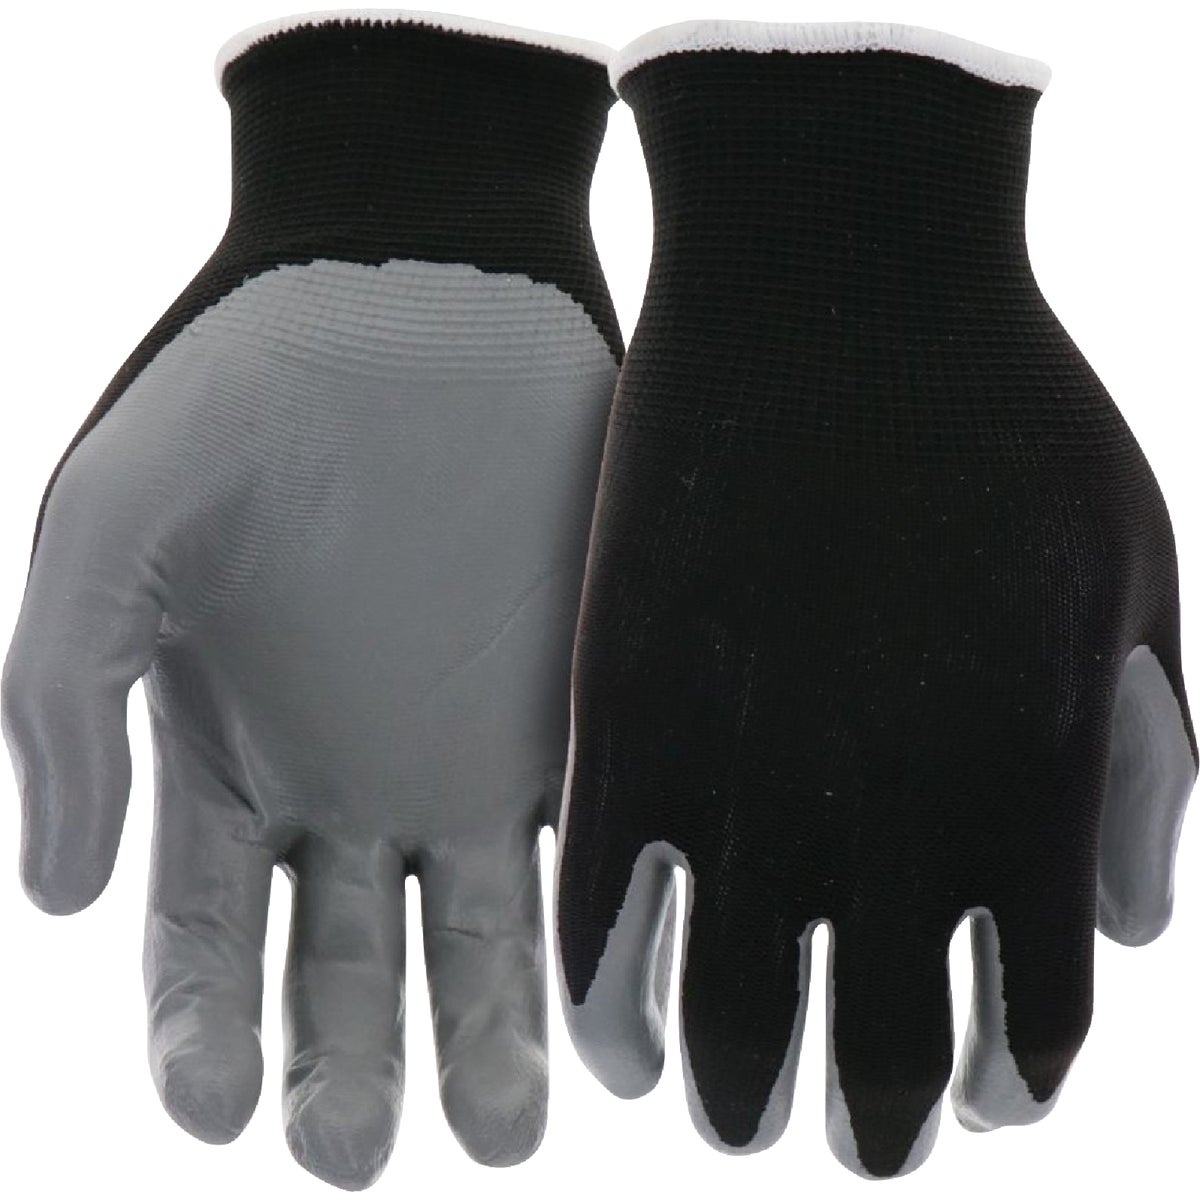 Do it Best Men's Large Nitrile Coated Glove, Black & Gray